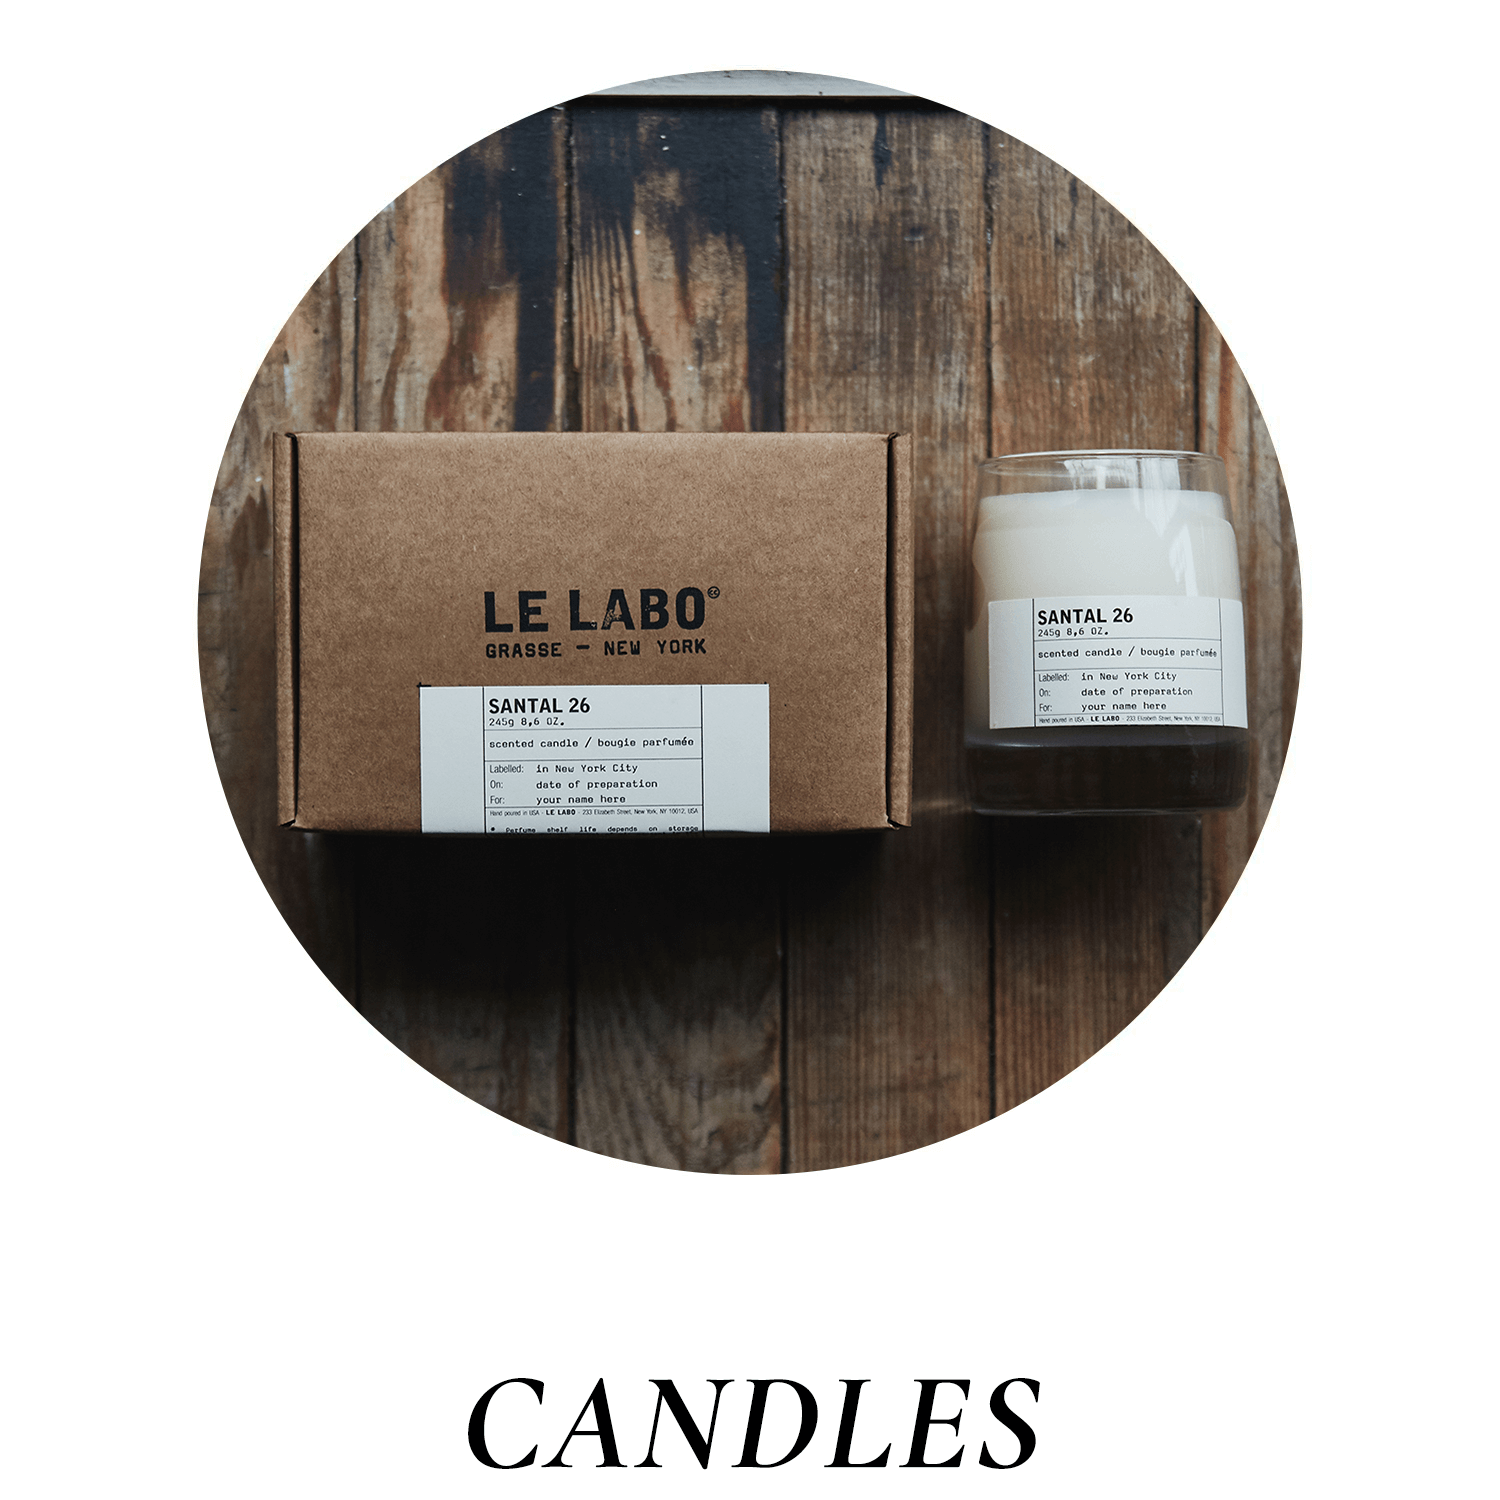 Le Labo Candles